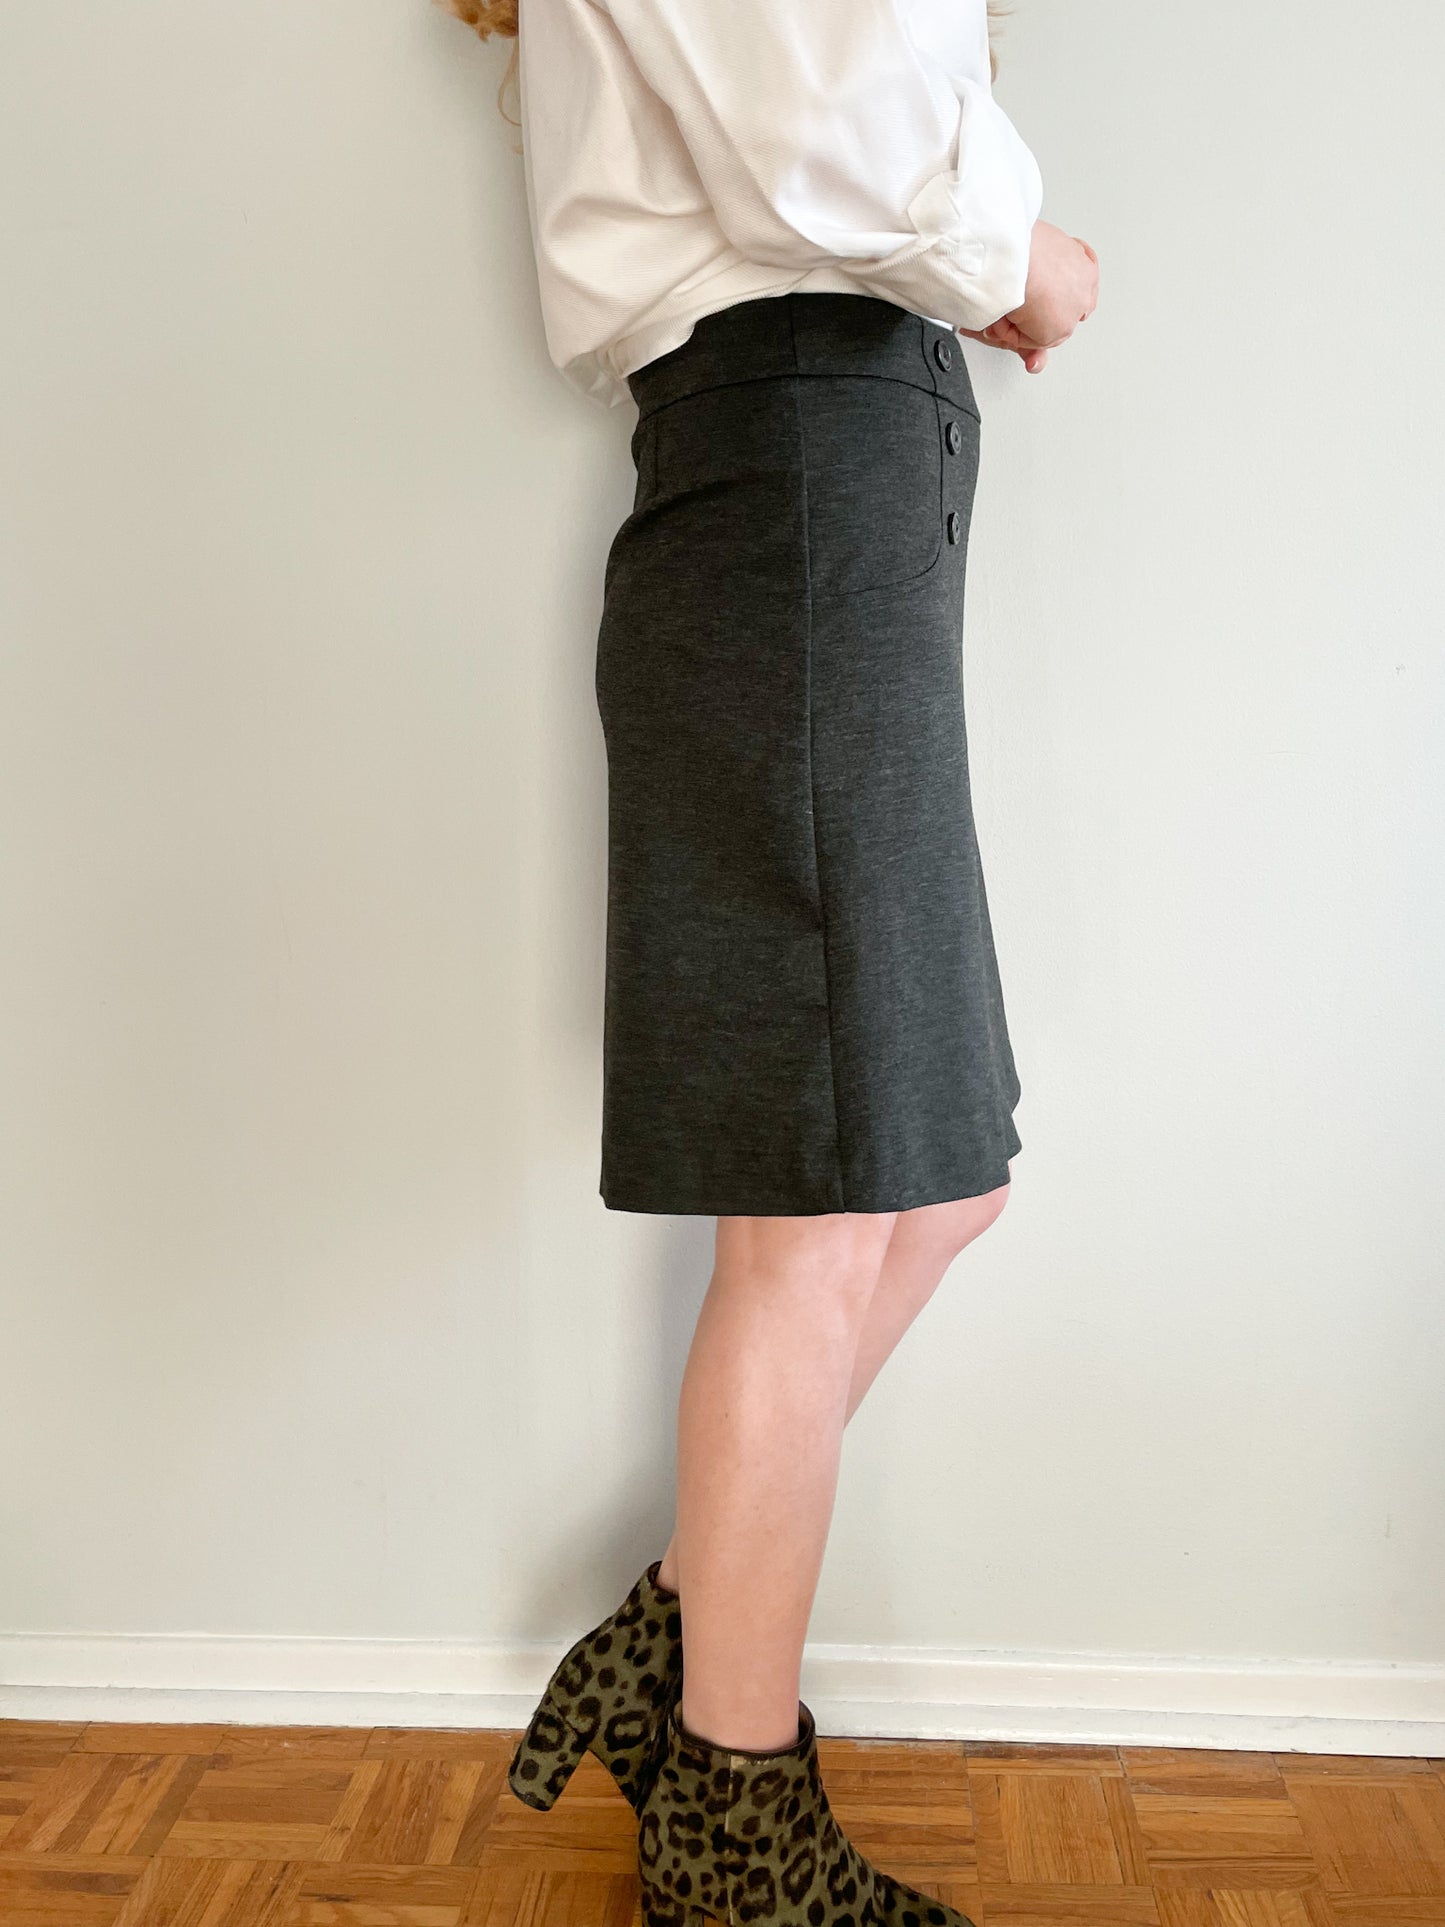 Reitman's Grey Button Pull On Pencil Skirt - Size 2 Petite